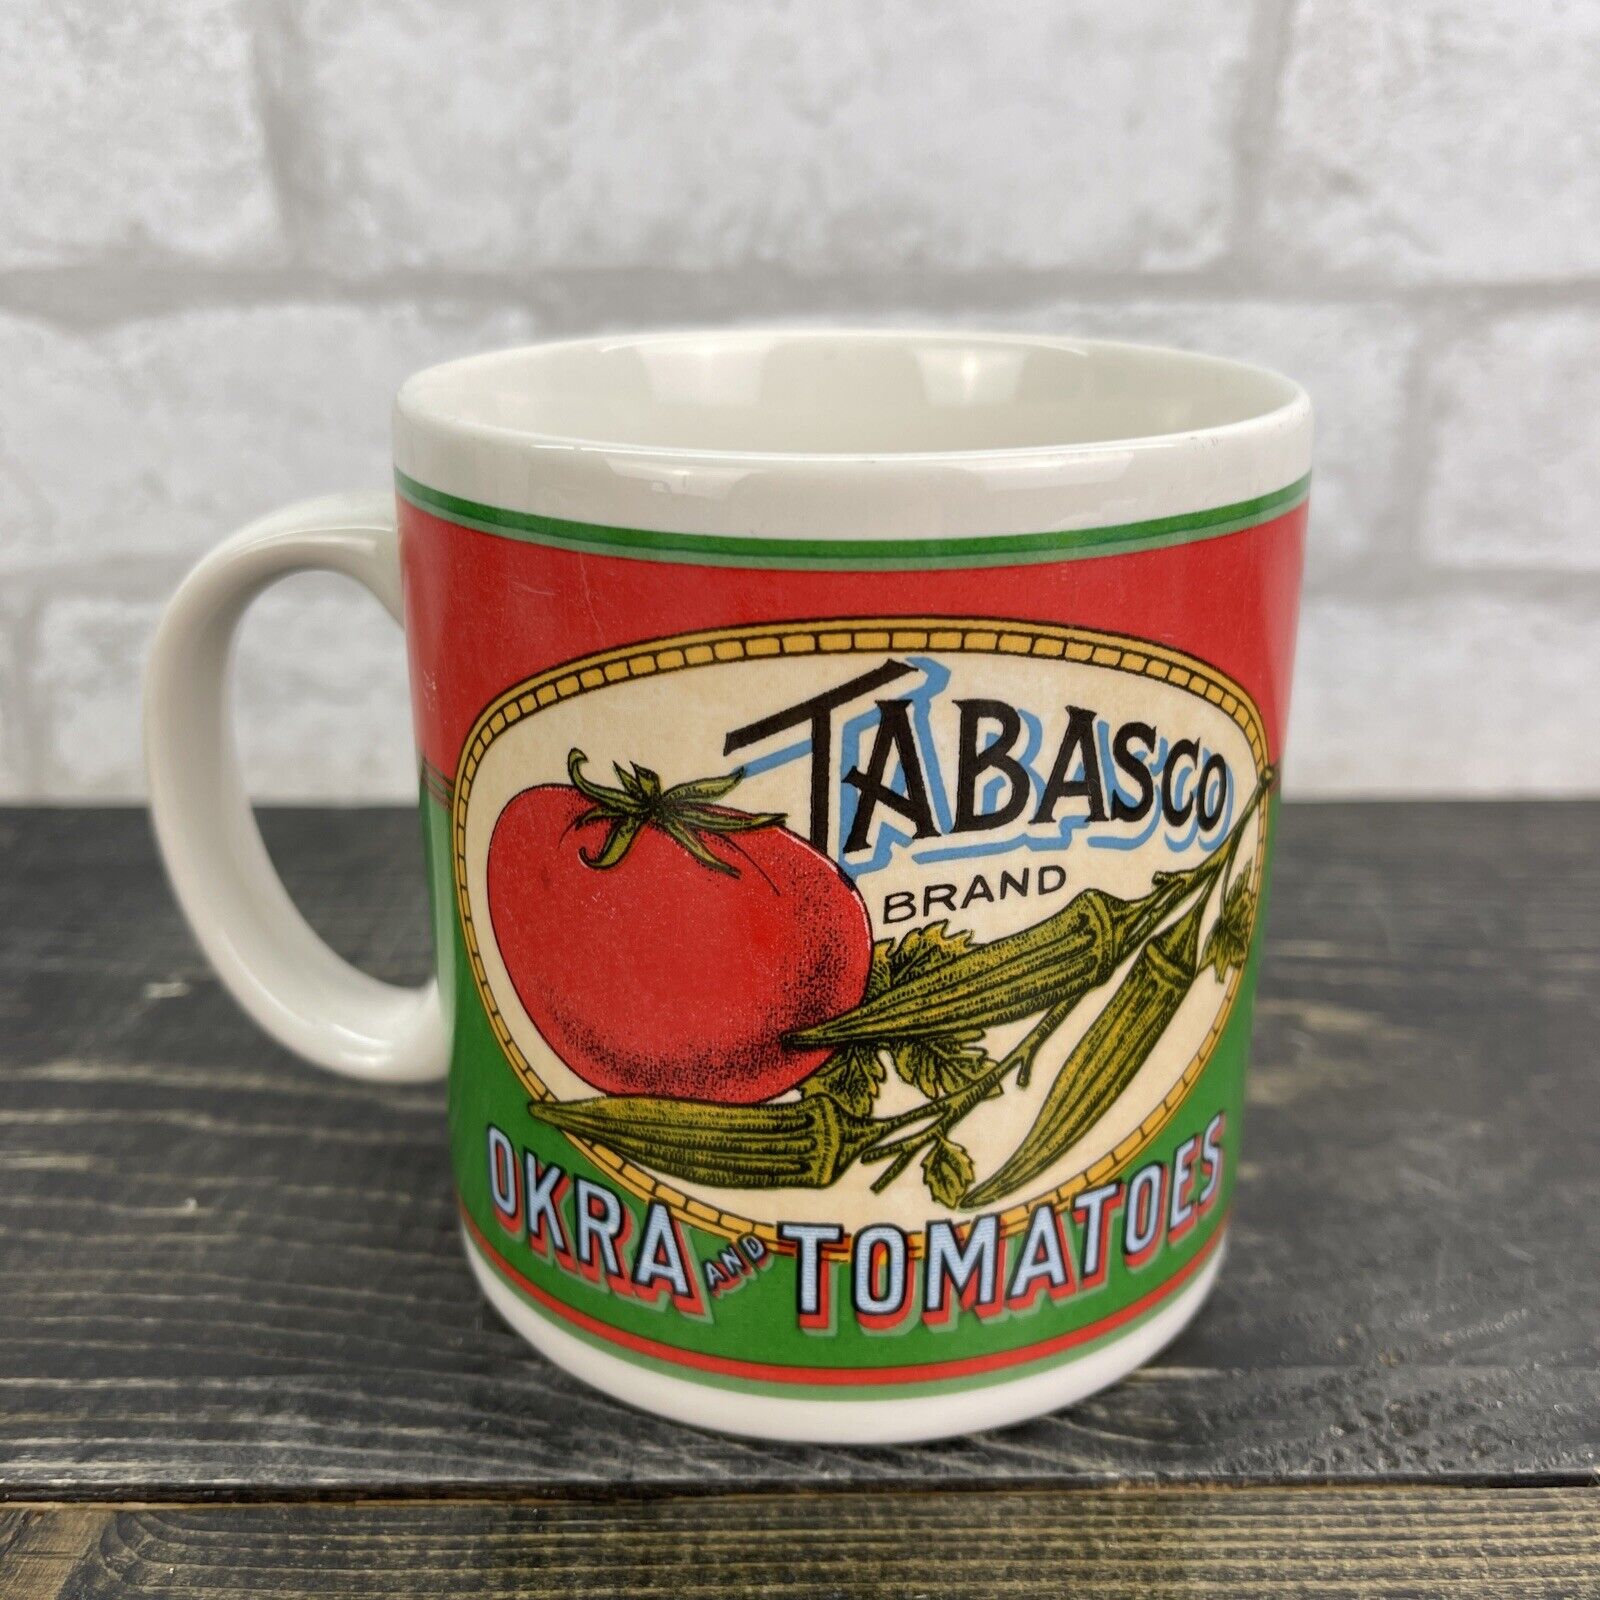 vtg tabasco brand coffee mug large 16oz mug Okra And Tomatoes Jambalaya Recipe